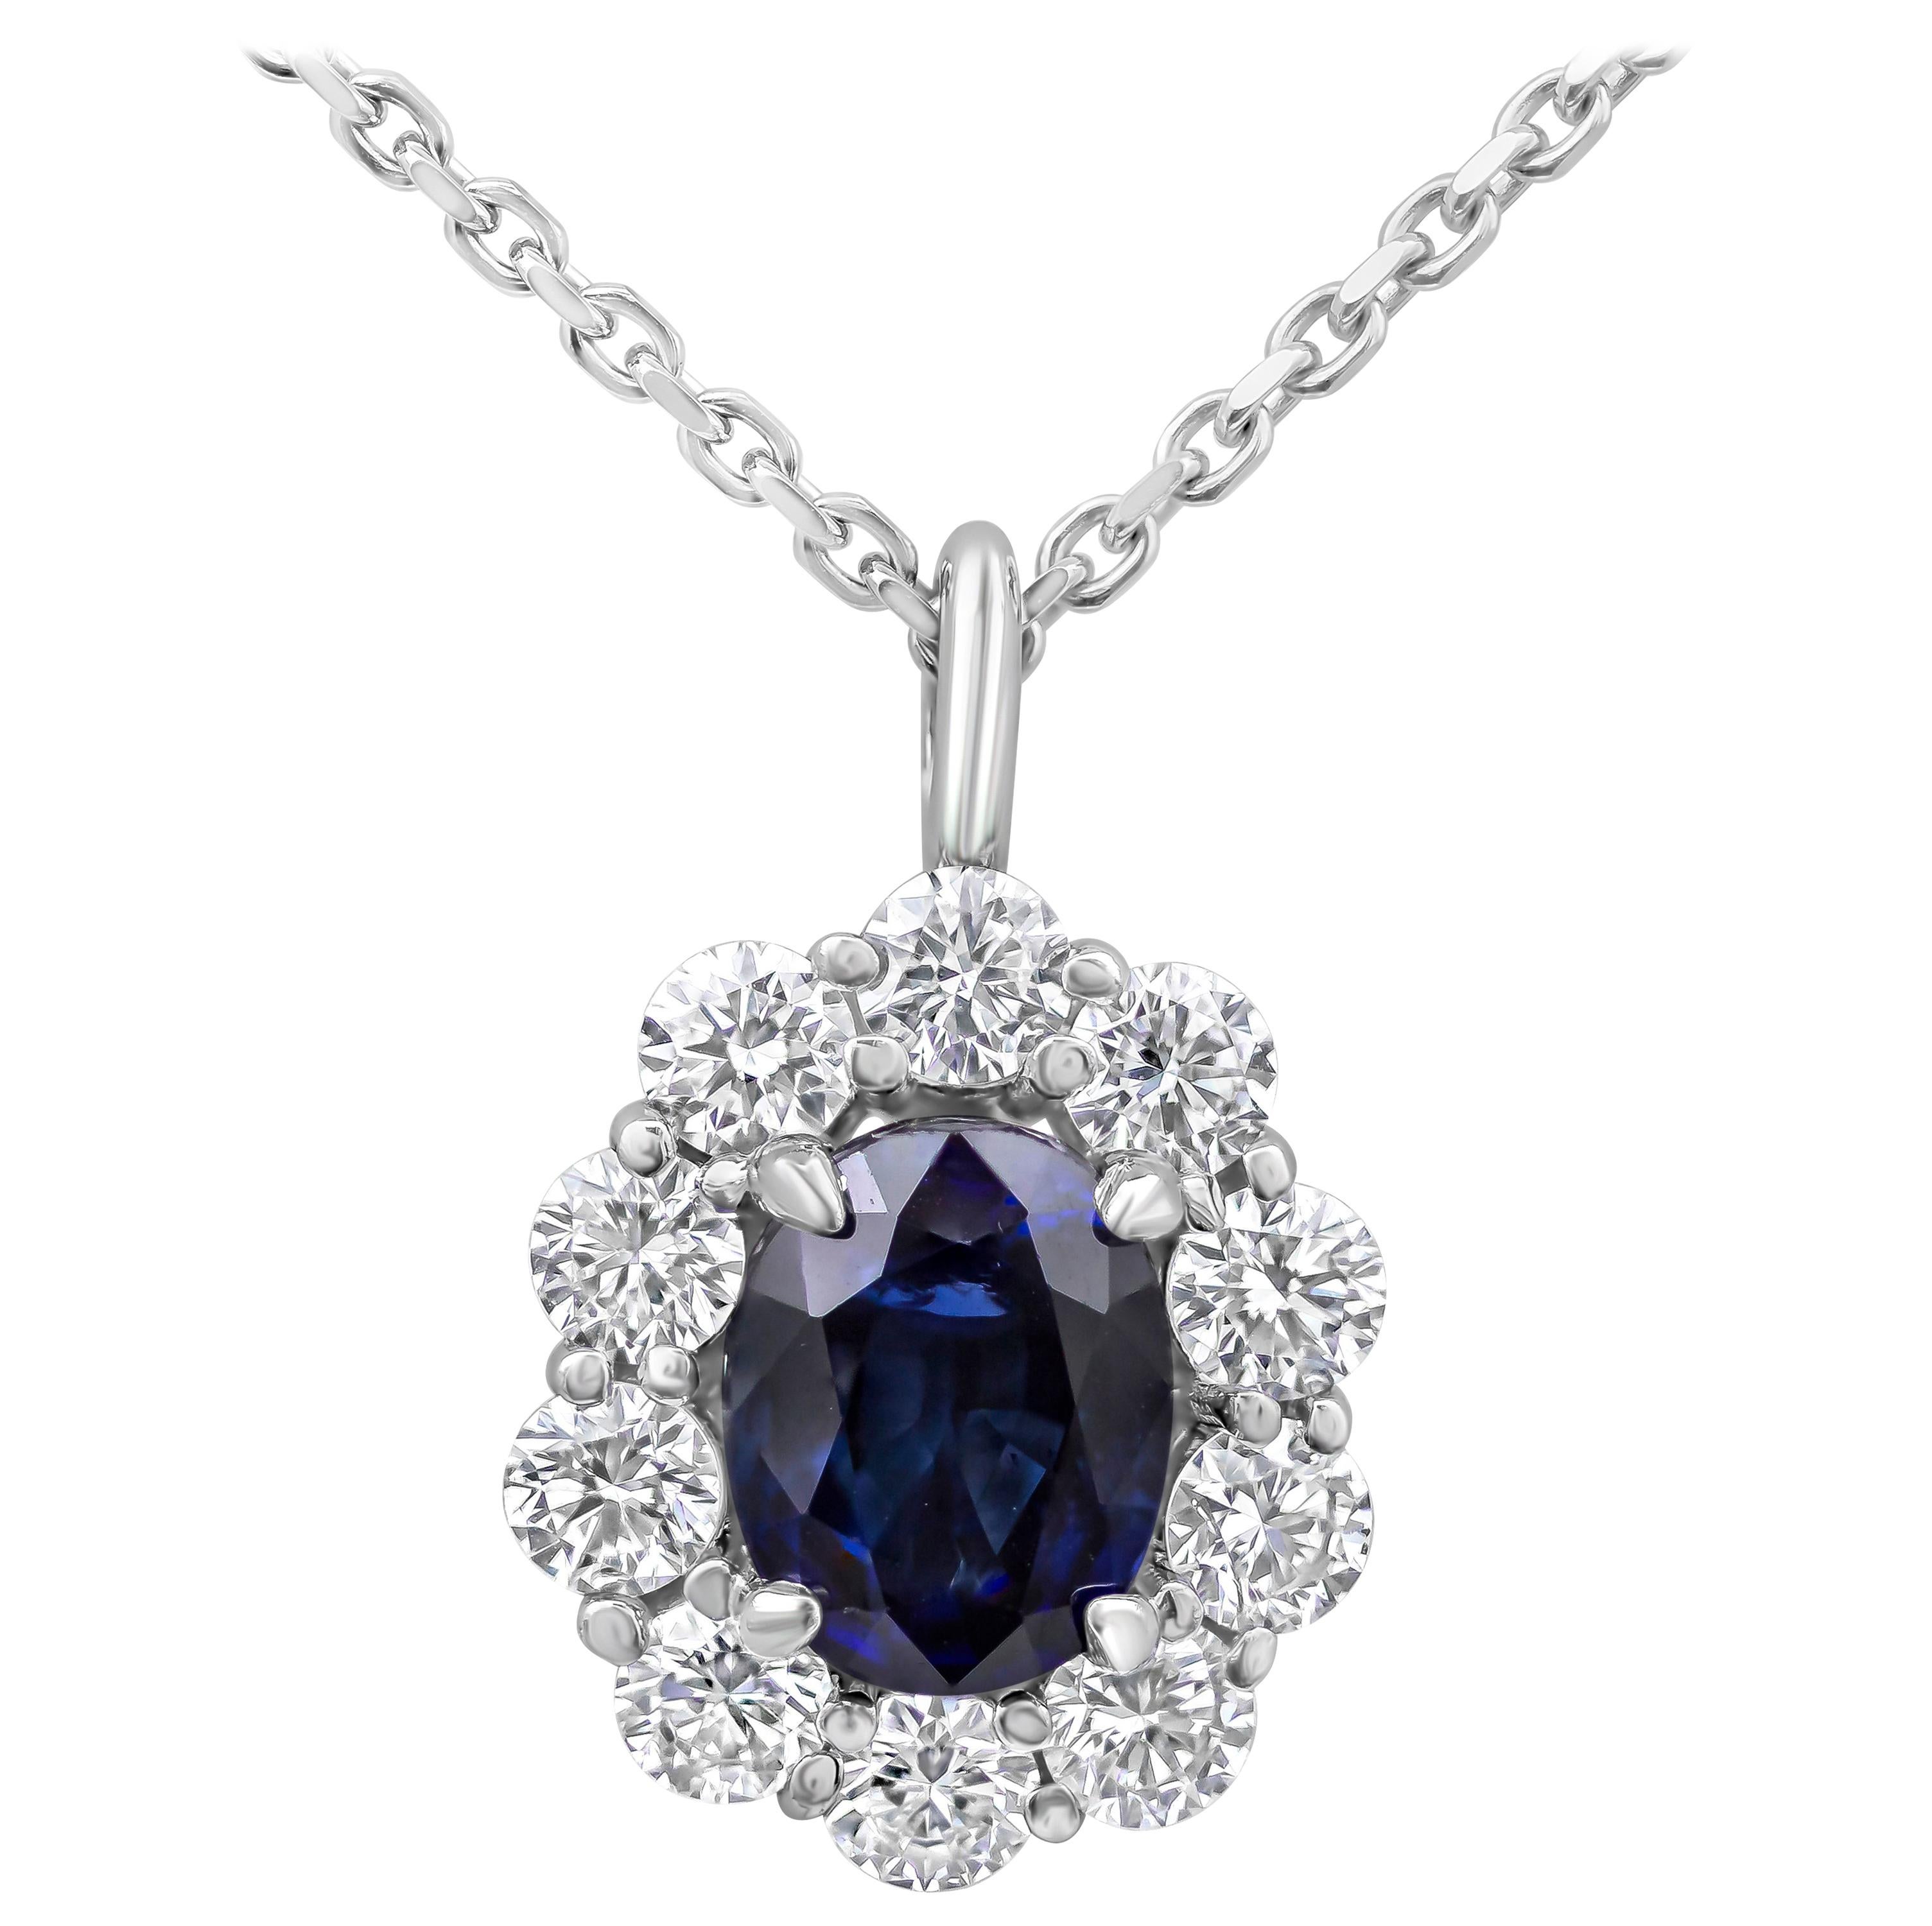 Roman Malakov 1.82 Carat Oval Blue Sapphire with Diamond Halo Pendant Necklace